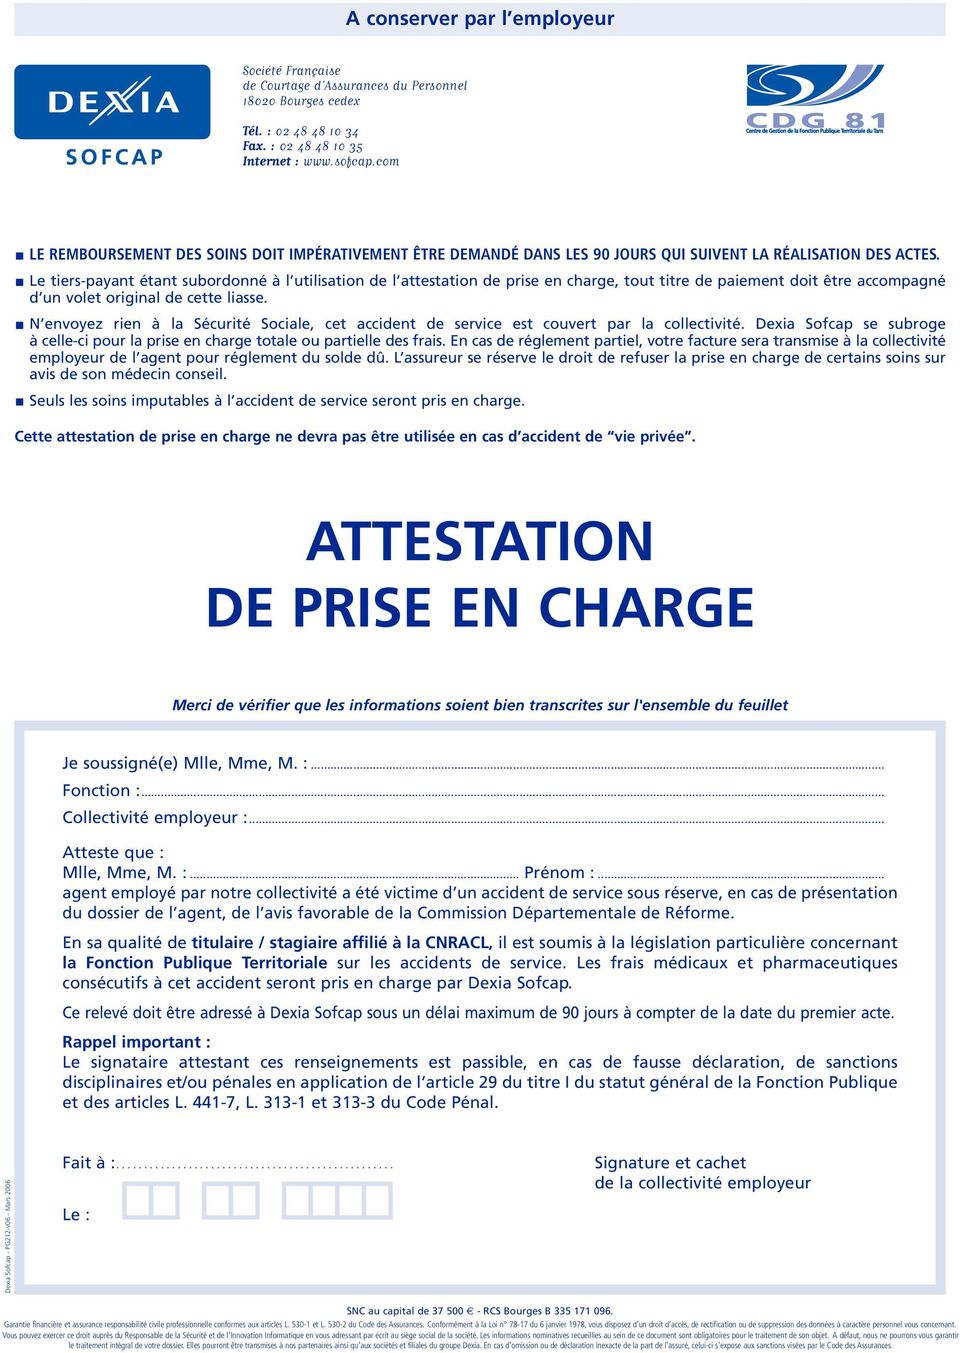 ATTESTATION DE PRISE EN CHARGE - PDF Free Download